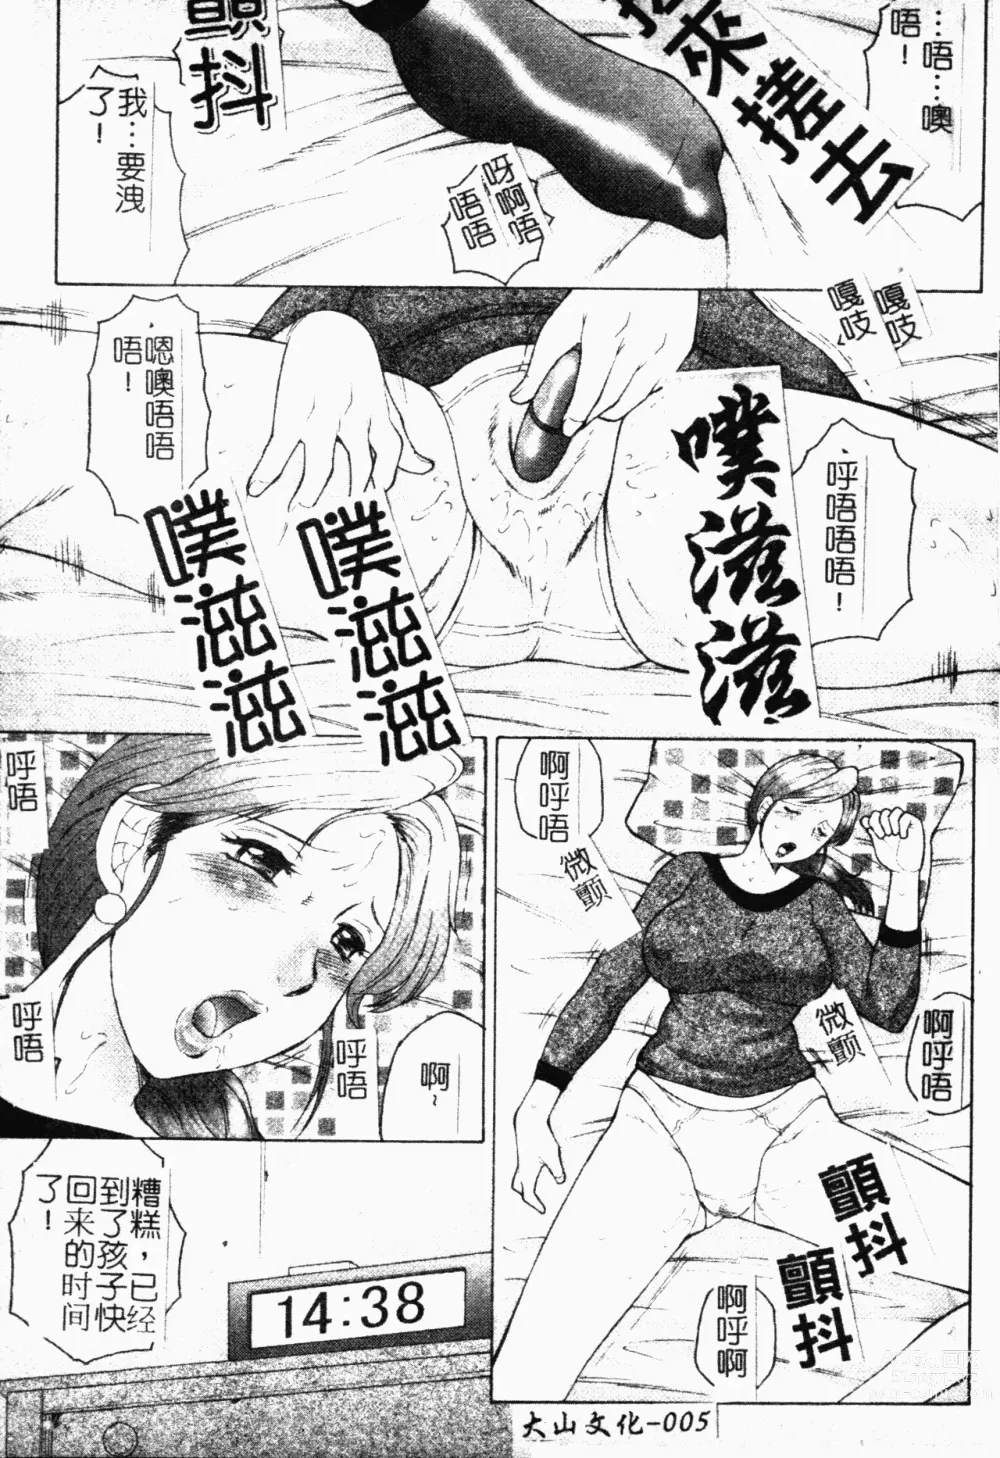 Page 5 of manga Haha Mamire